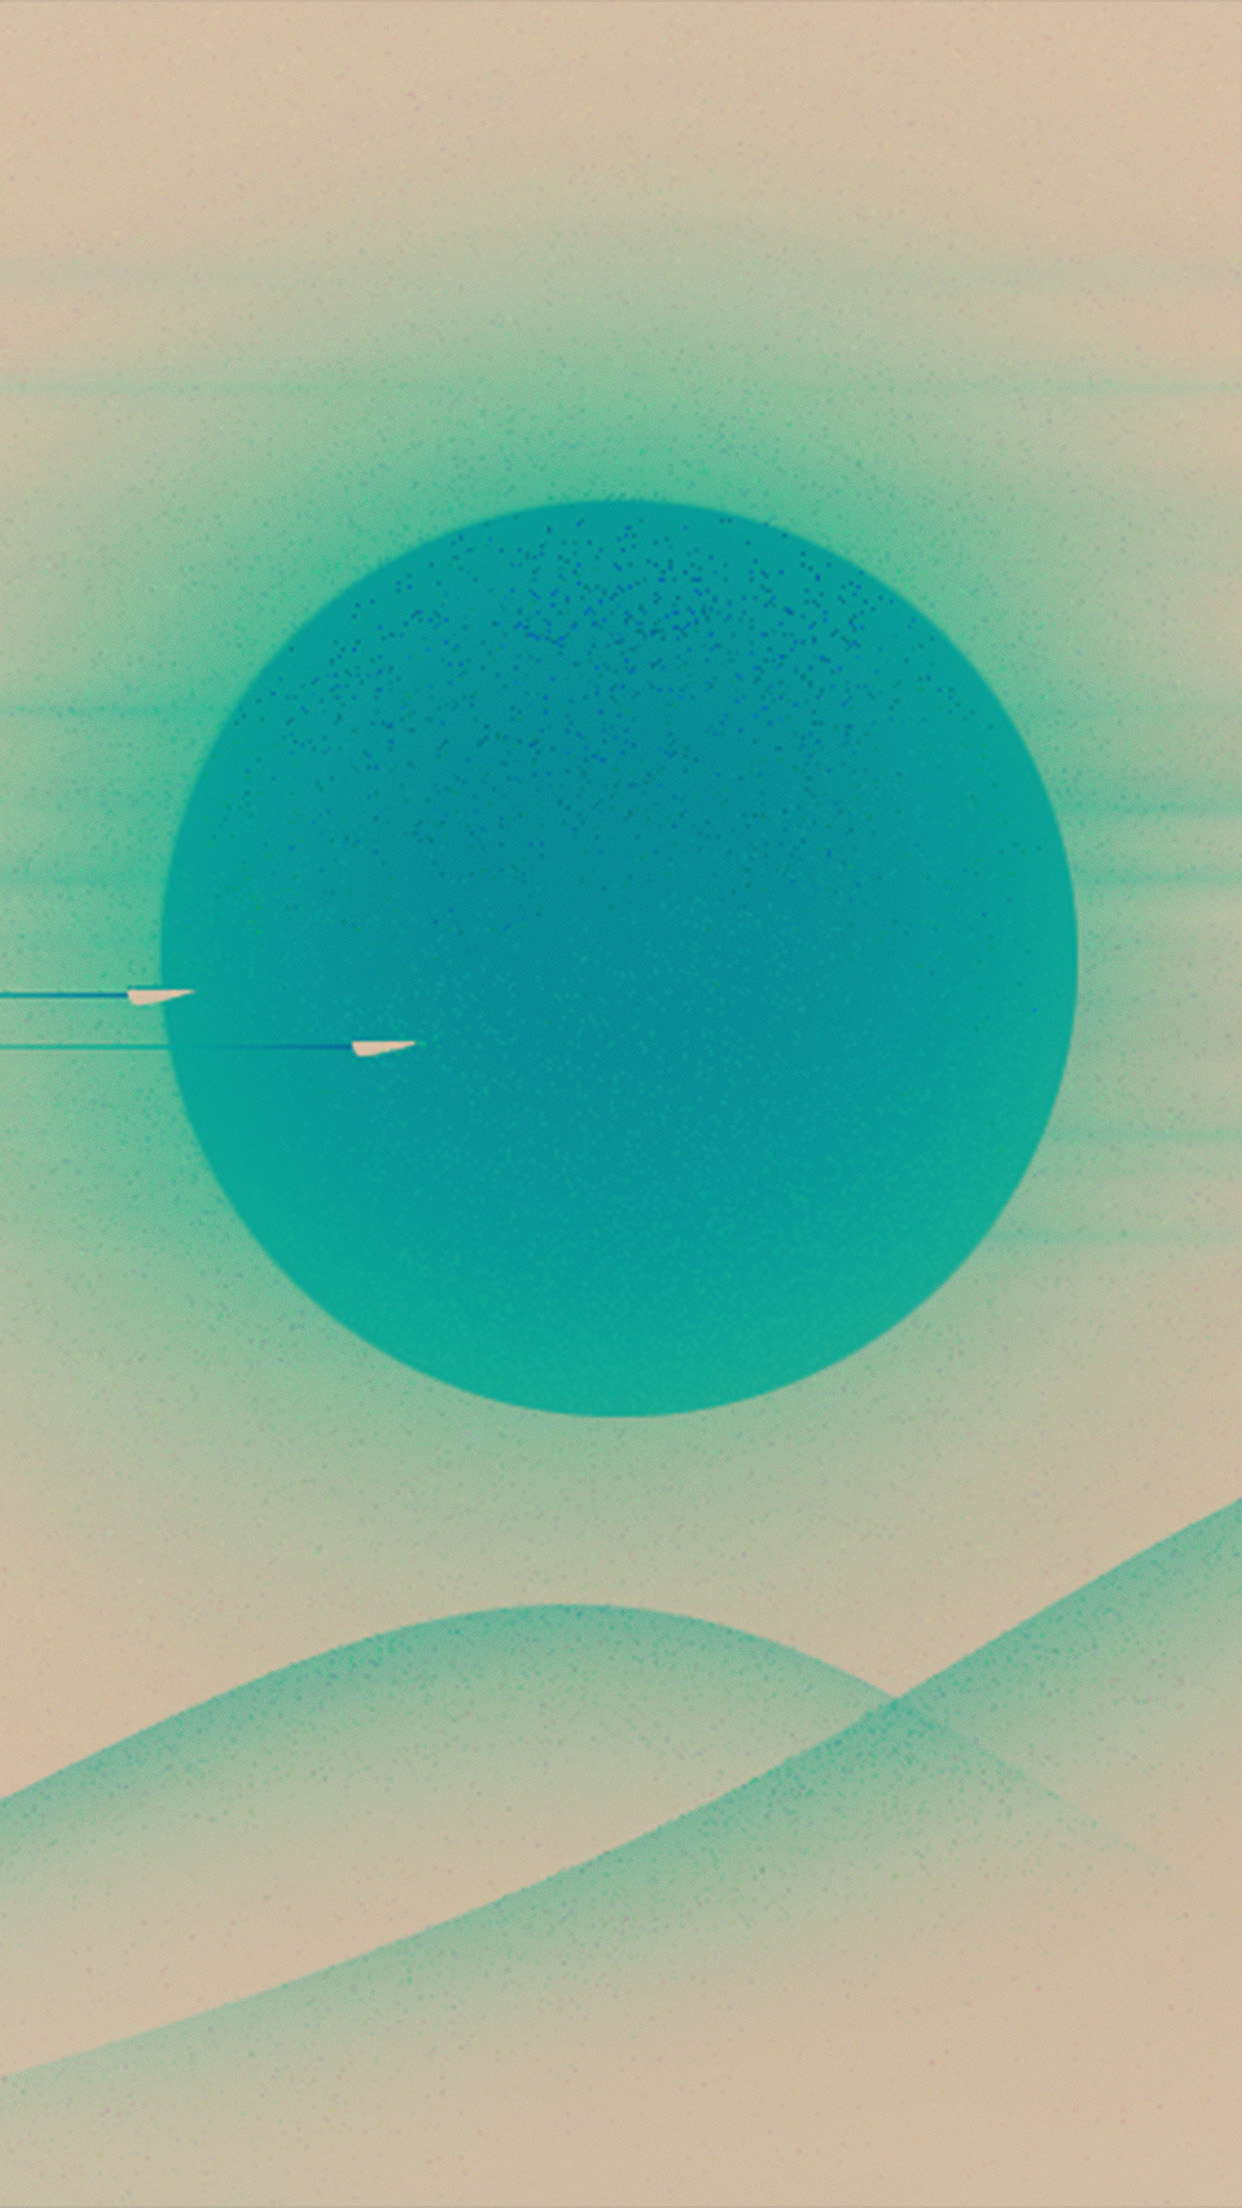 iPhone X wallpaper. sunset blue minimal illustration art